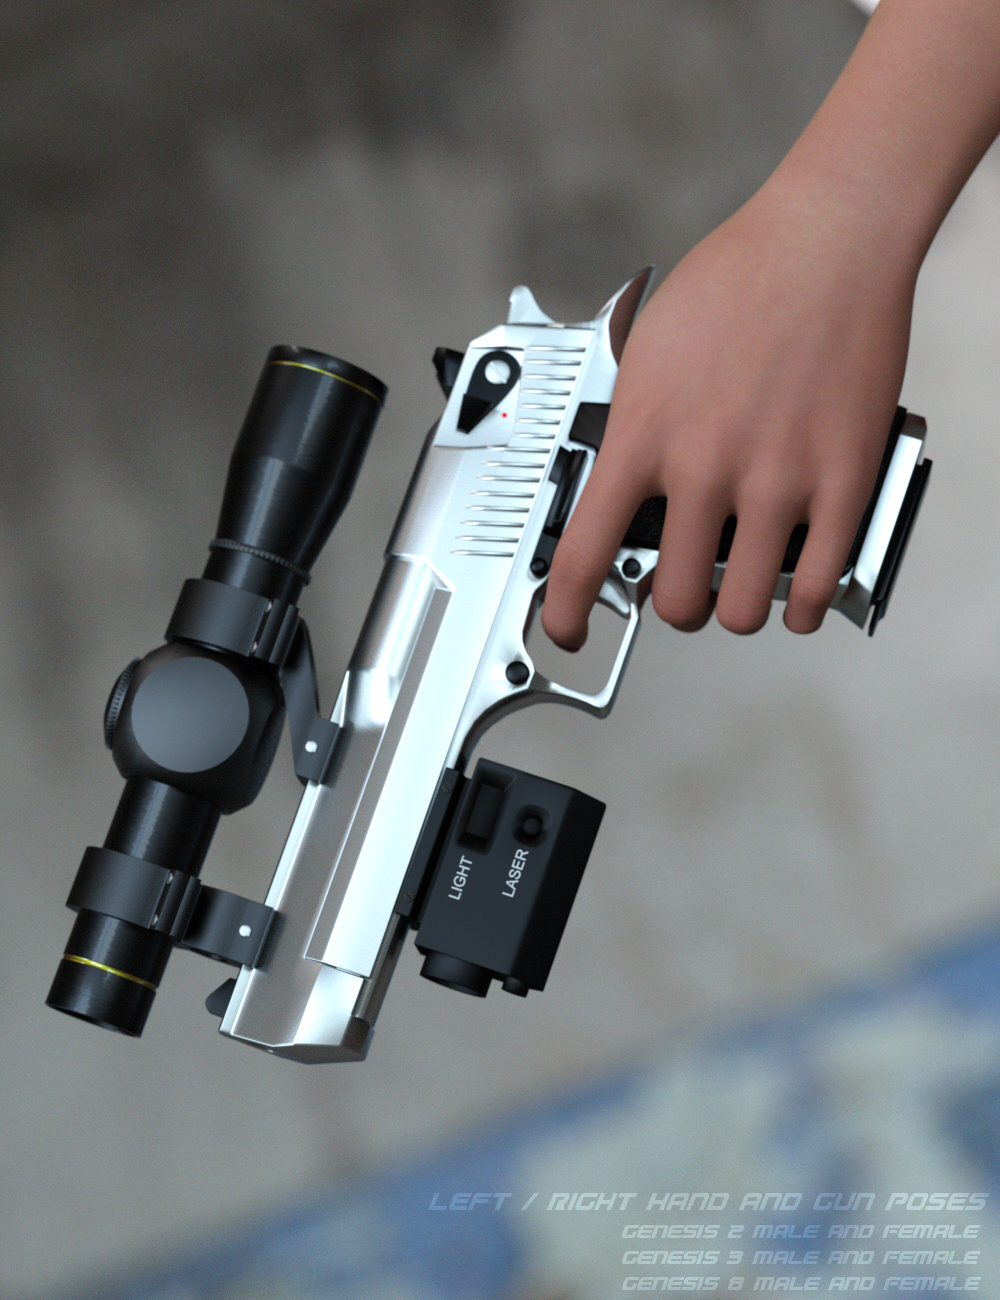 Magnum 44 Pistol with Accessories by: Mattymanx, 3D Models by Daz 3D